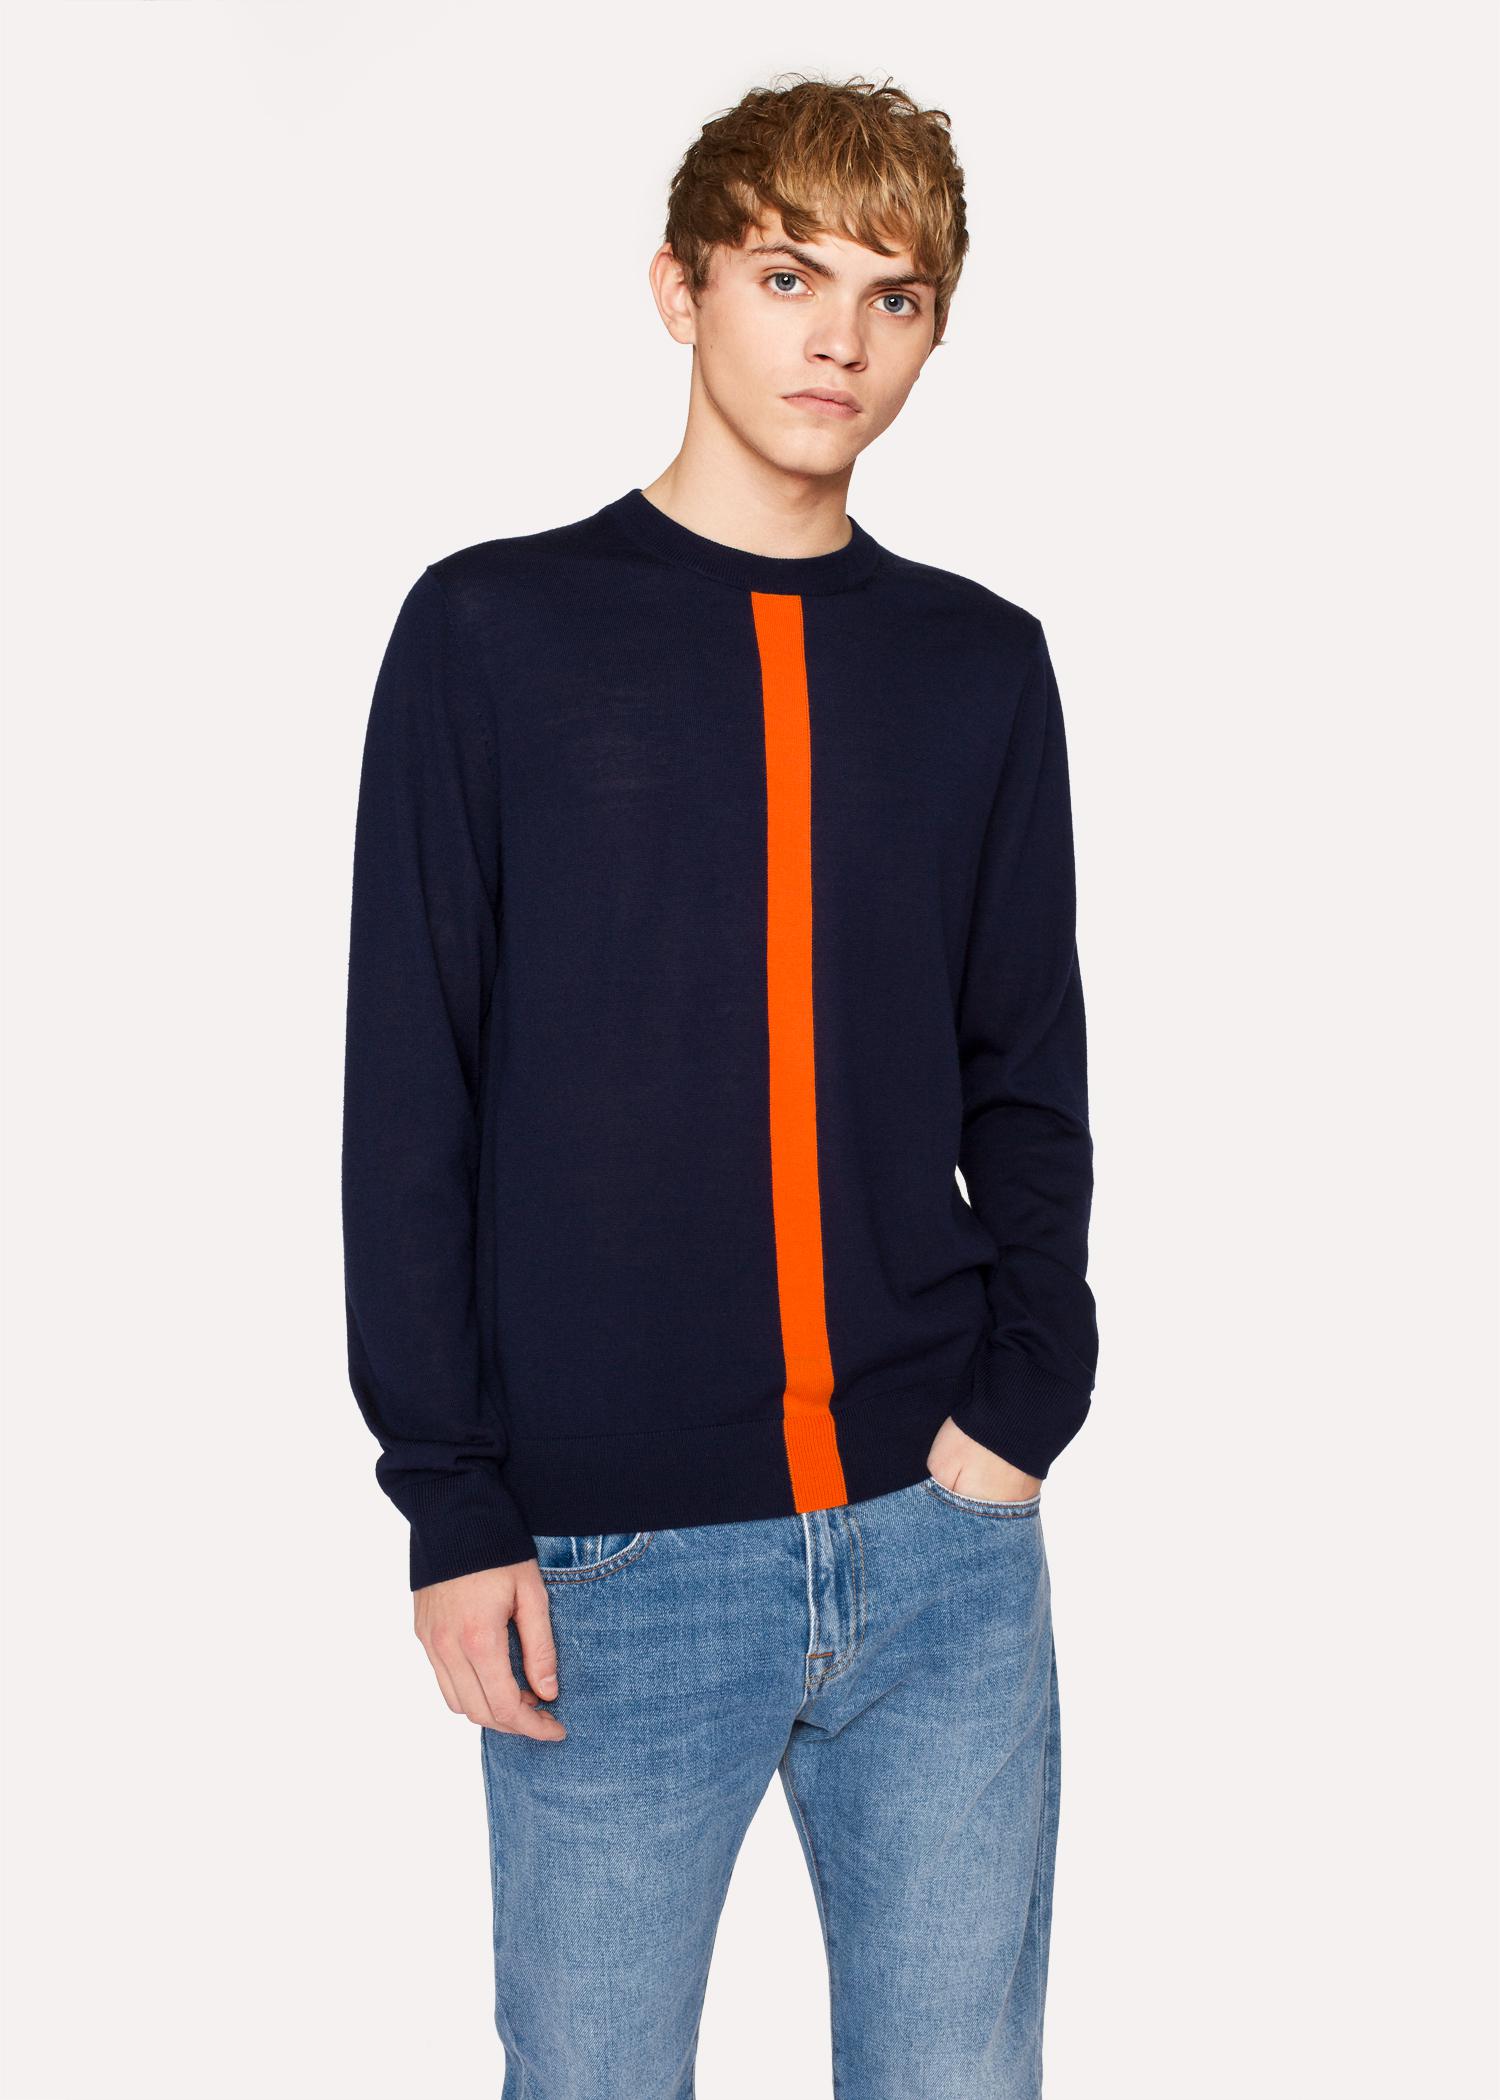 Paul Smith Navy Wool Sweater with Orange Stripe in Blue for Men | Lyst  Australia